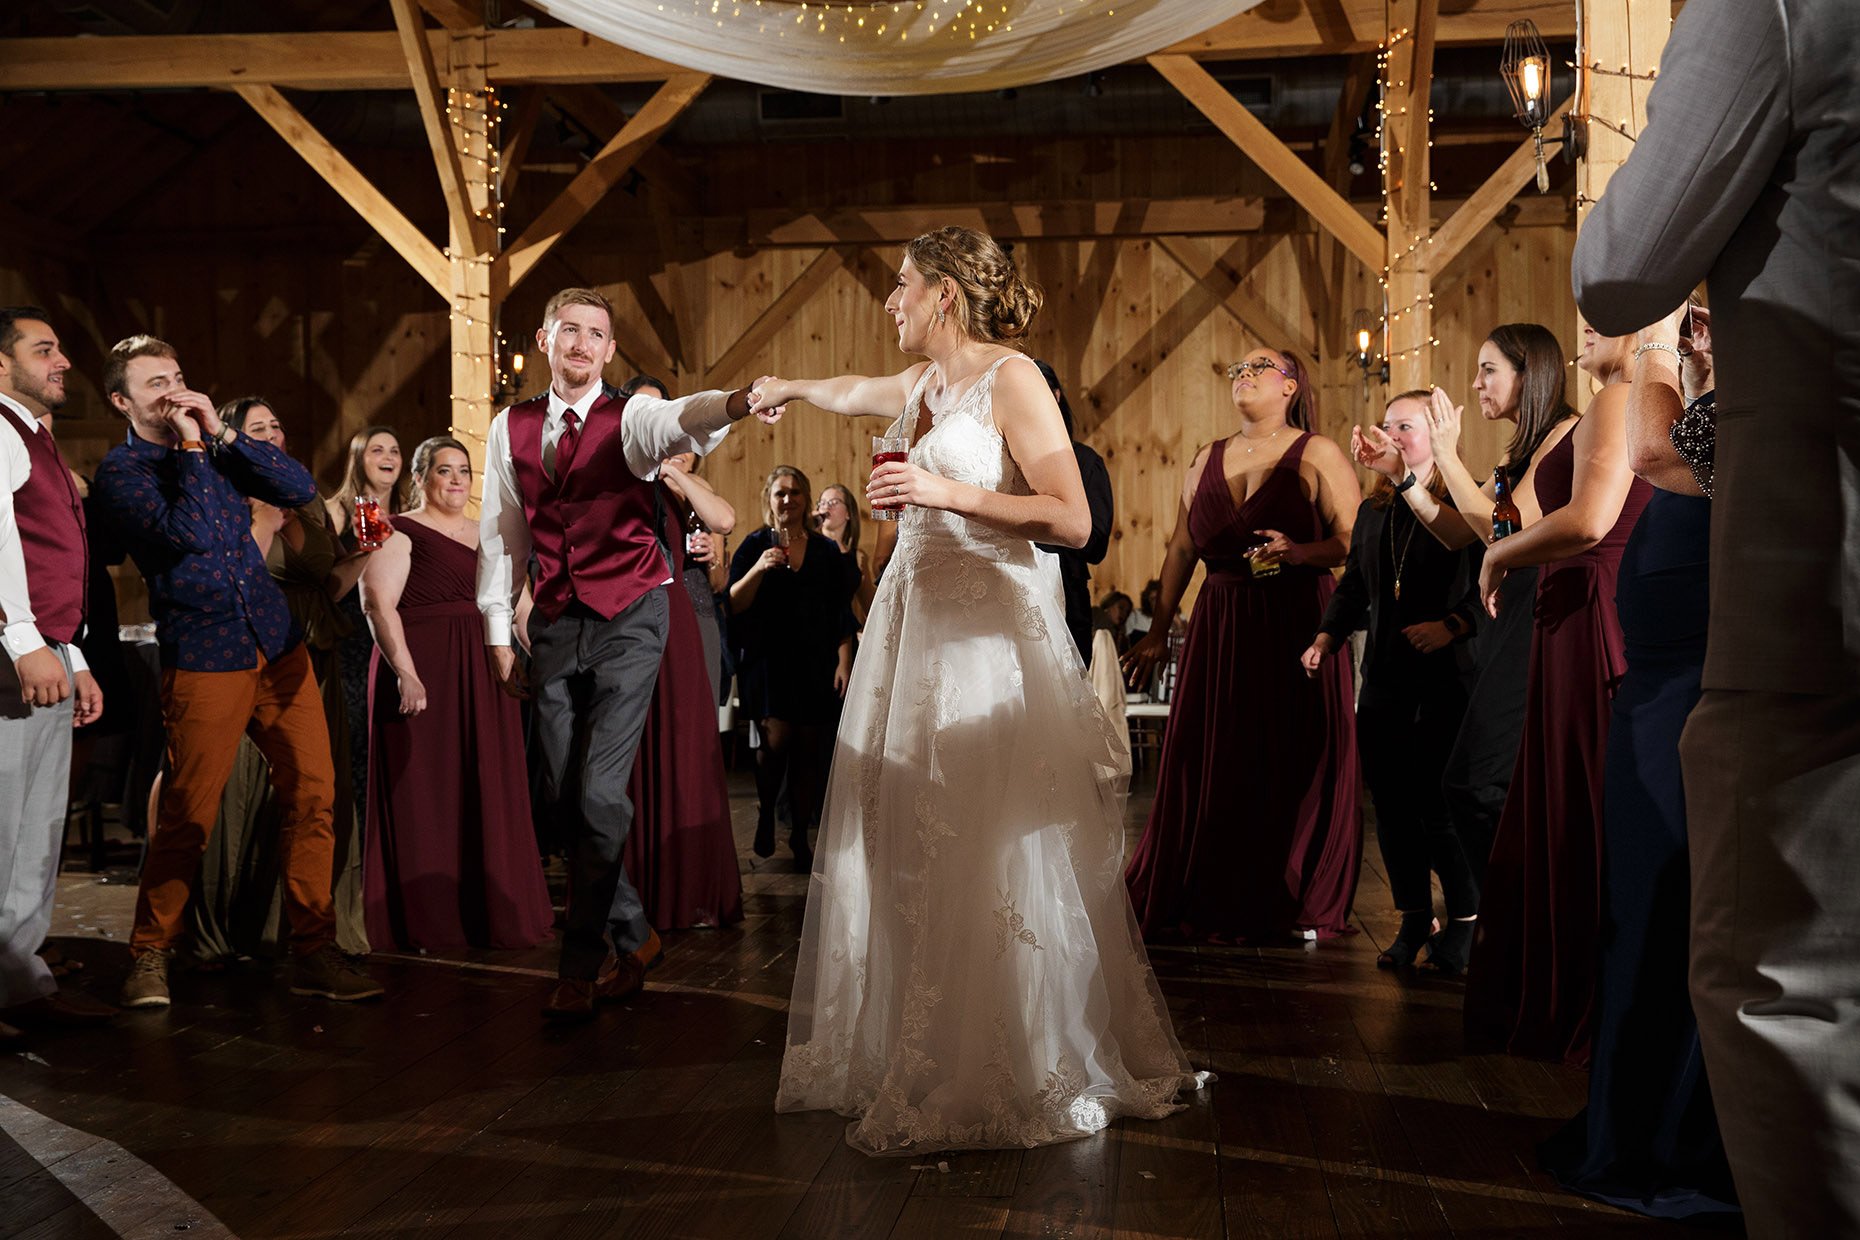 Groom dancing with bride at reception